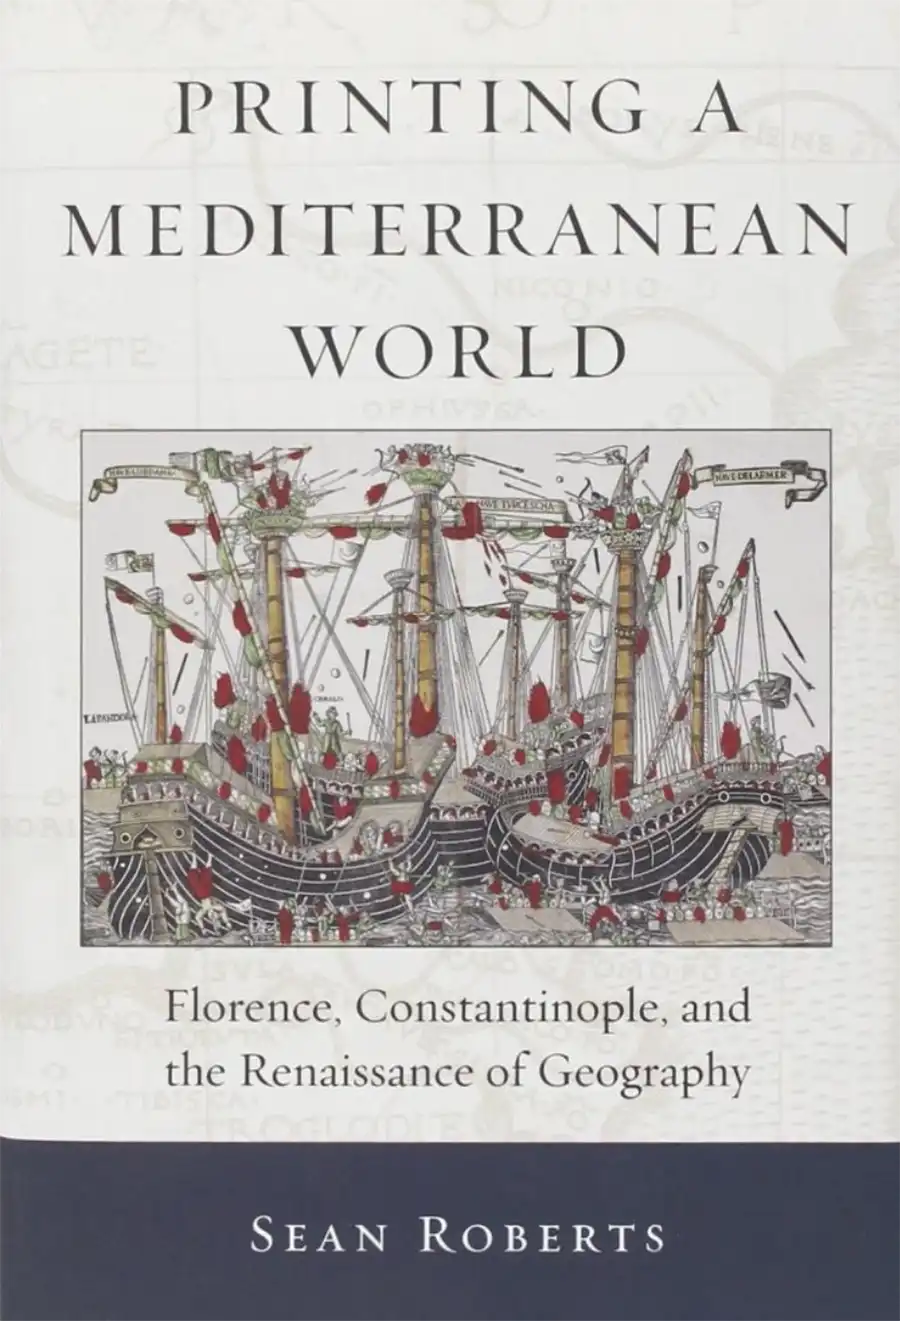 Roberts, Sean. Printing a Mediterranean World: Florence, Constantinople, and the Renaissance of Geography. Cambridge: Harvard University Press, 2013.